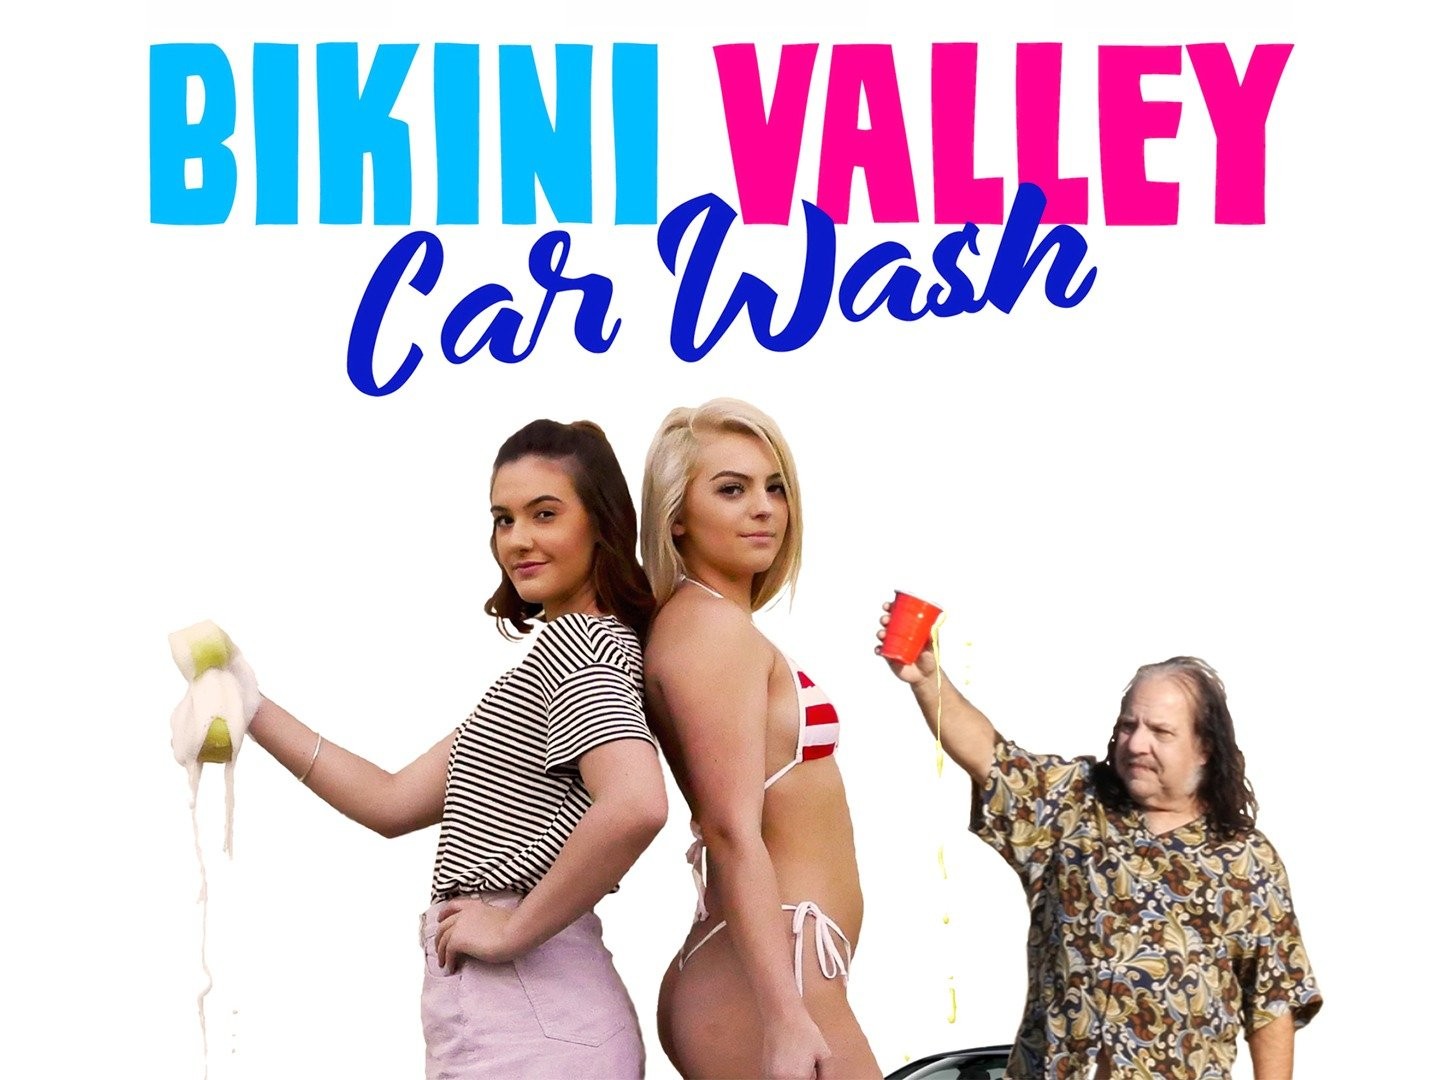 All American Bikini Car Wash - Rotten Tomatoes